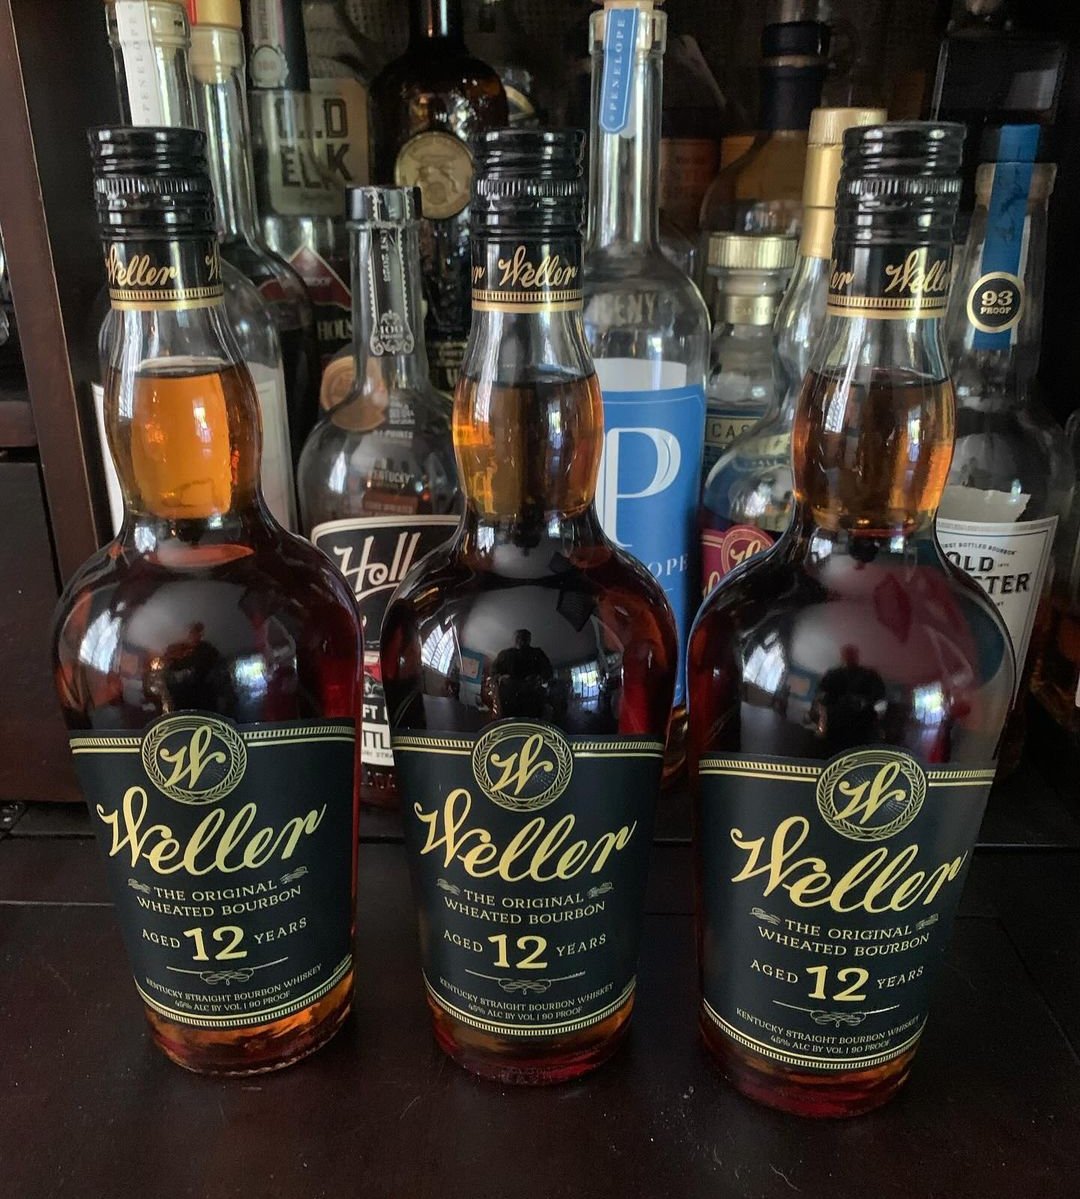 Available in stock place you order now.
.
.
.
.
.
.
.
#bourbon #staggbourbon #bourbonhunter #bourbonwhisky #weller107 #bourbonandbeyond #bourbonlover #liquorstore #bourbontube